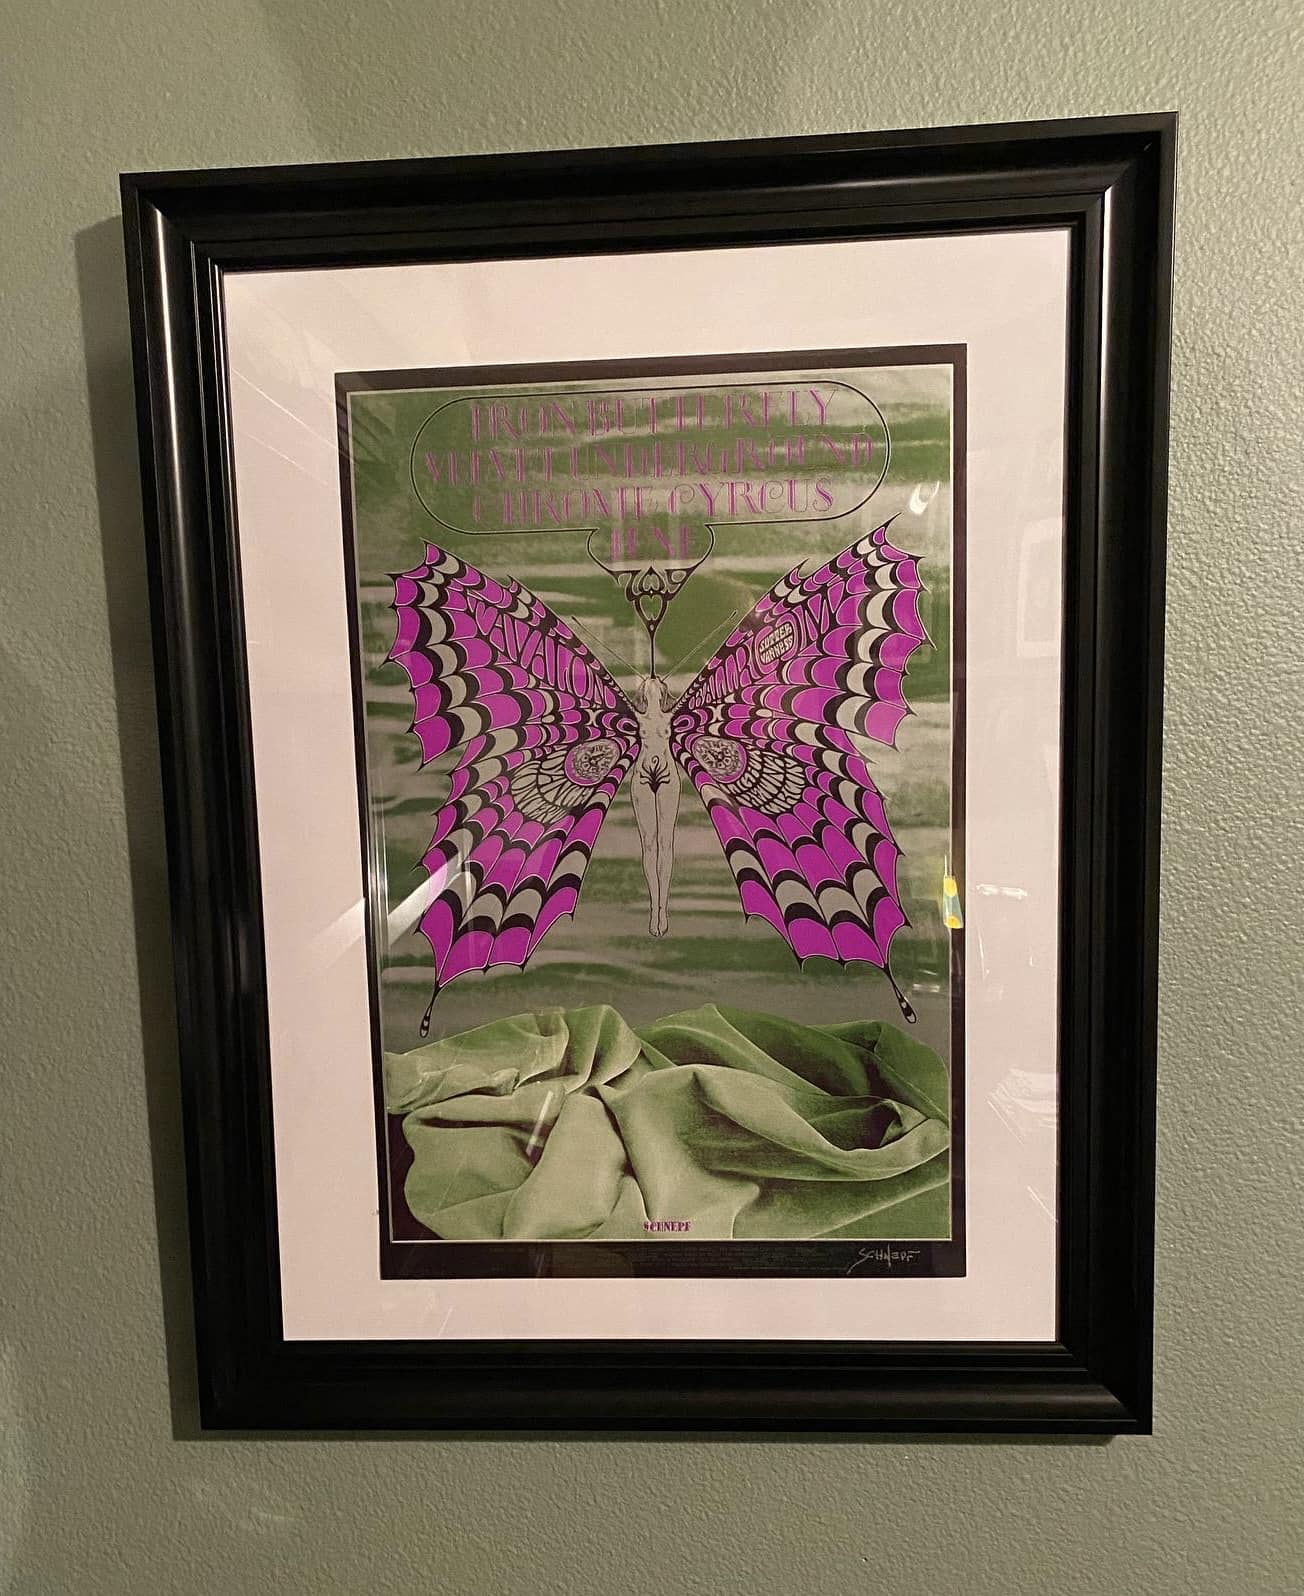 Iron Butterfly - Original Concert Poster - 1968 - Artist Signed